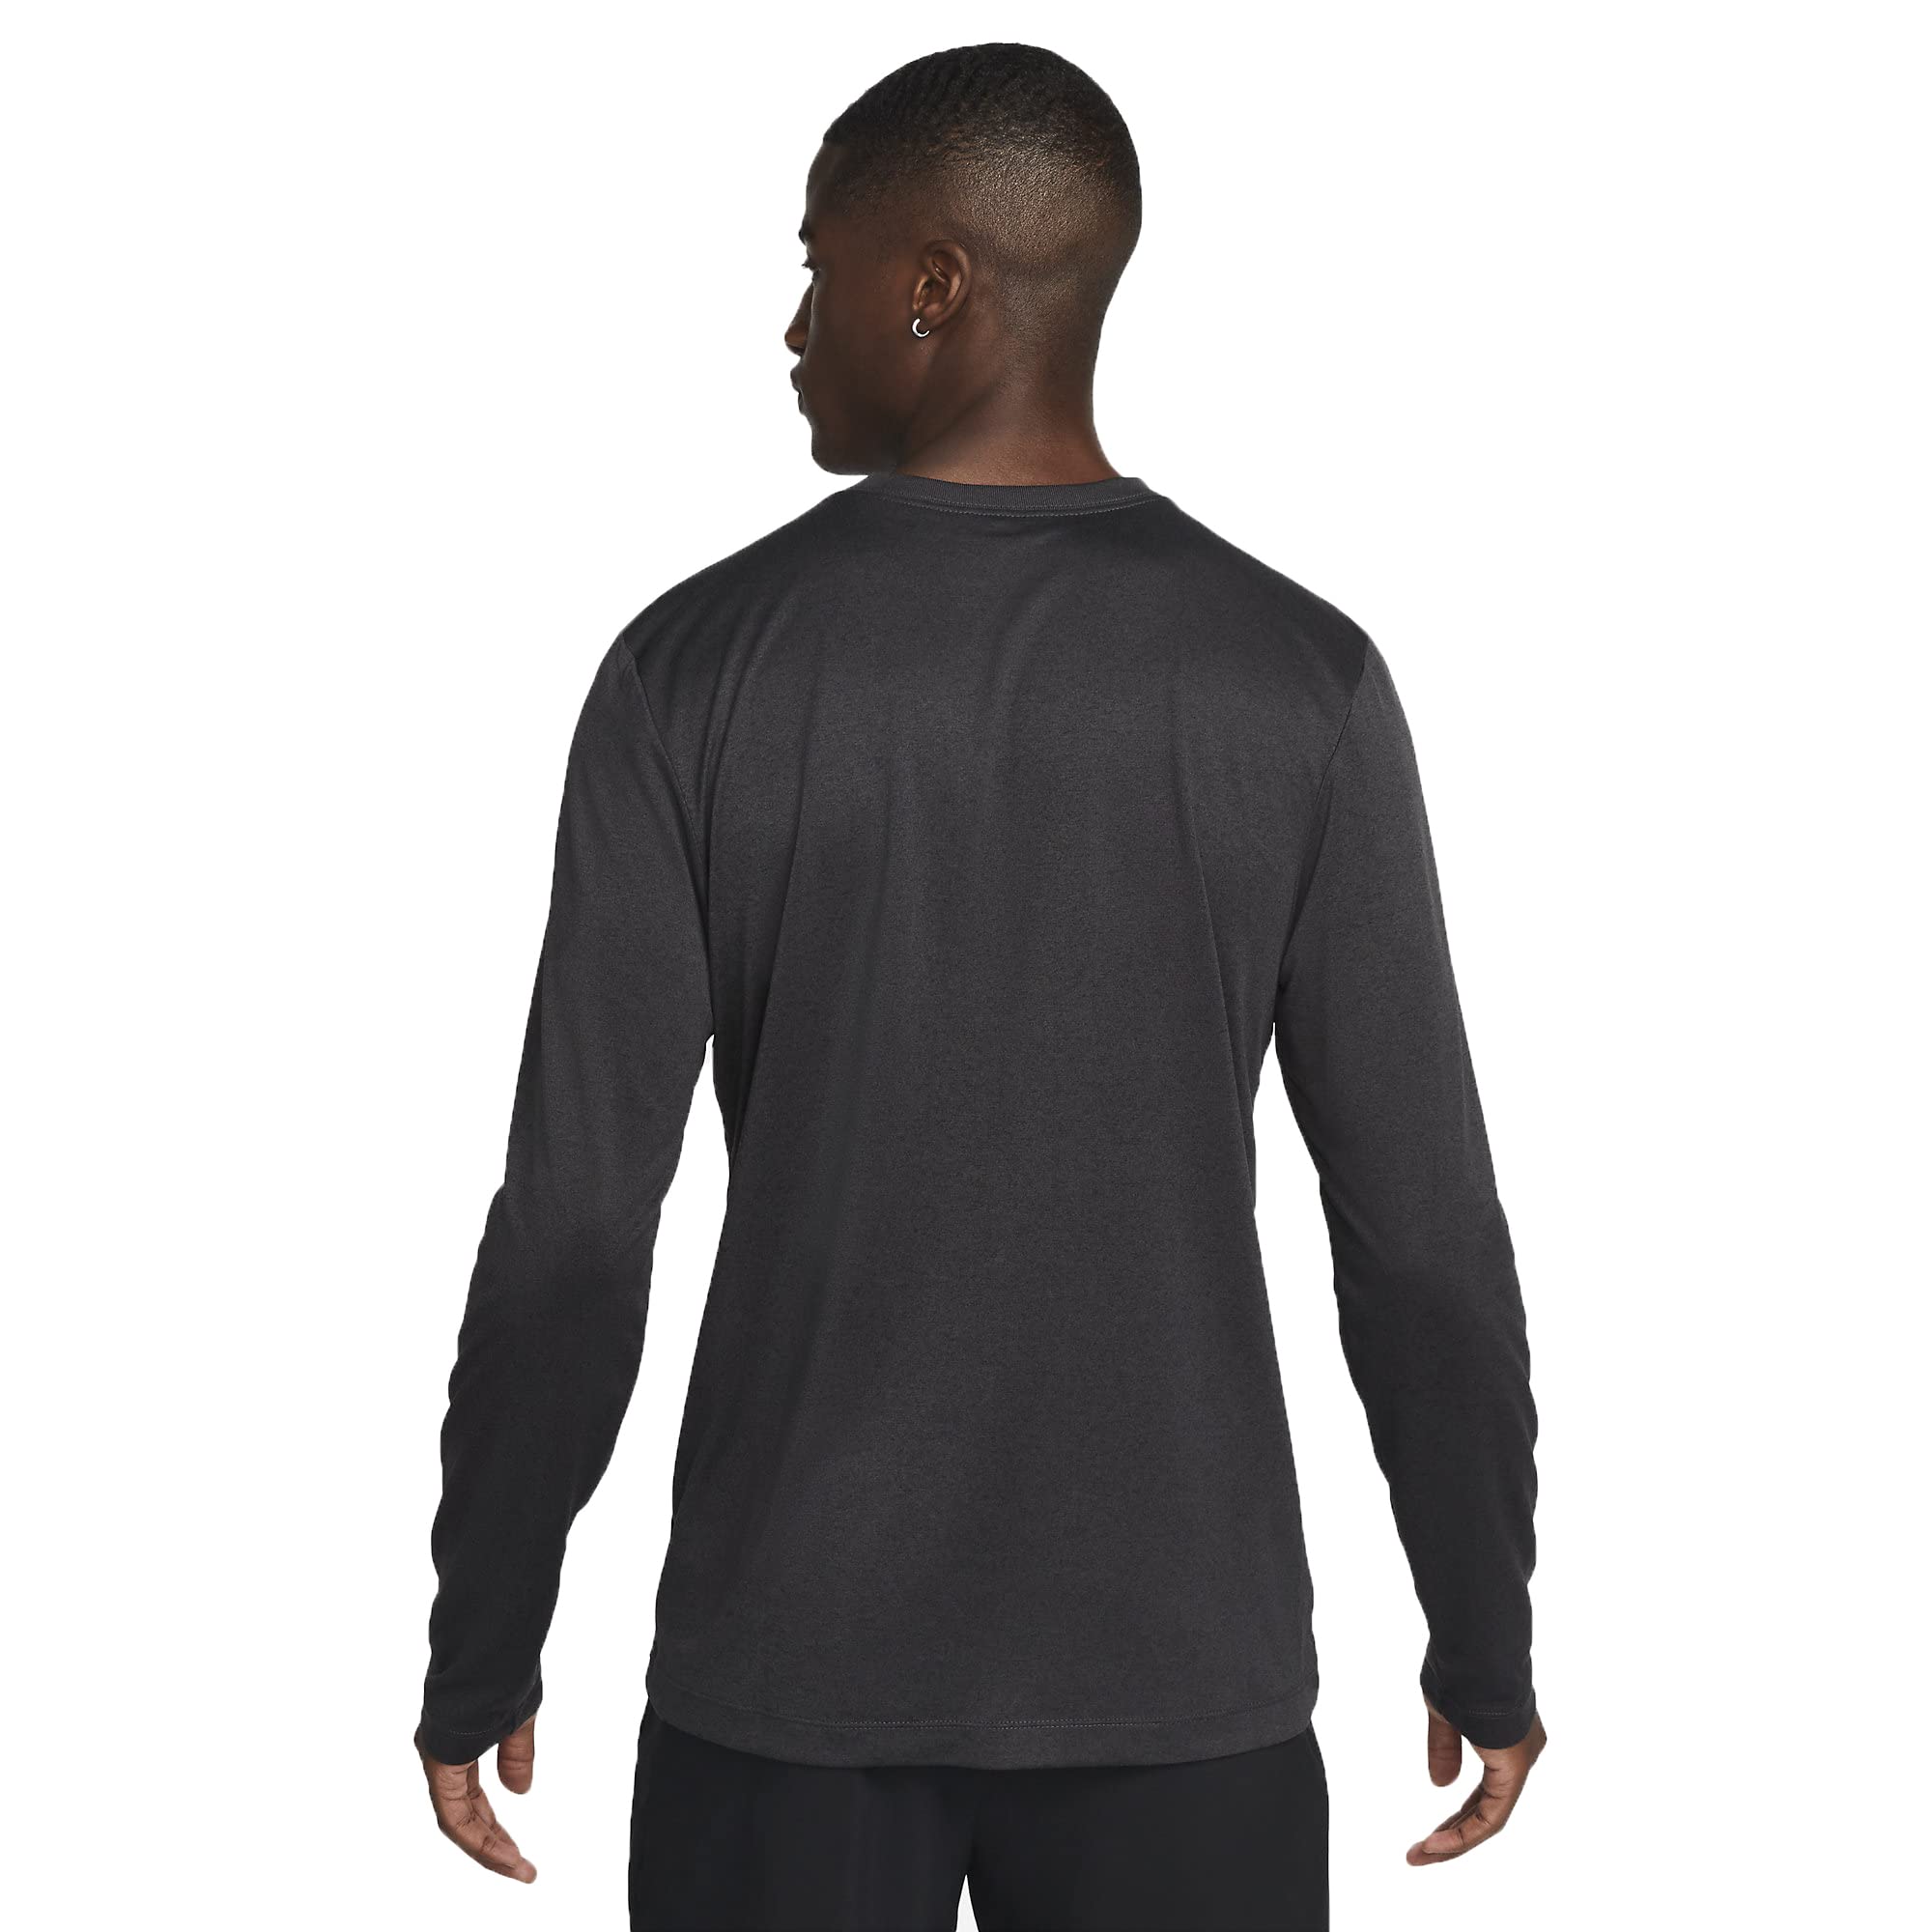 Nike Men's DriFit Reset Legend Long Sleeve Tee, Dark Gray Gray, X-Large